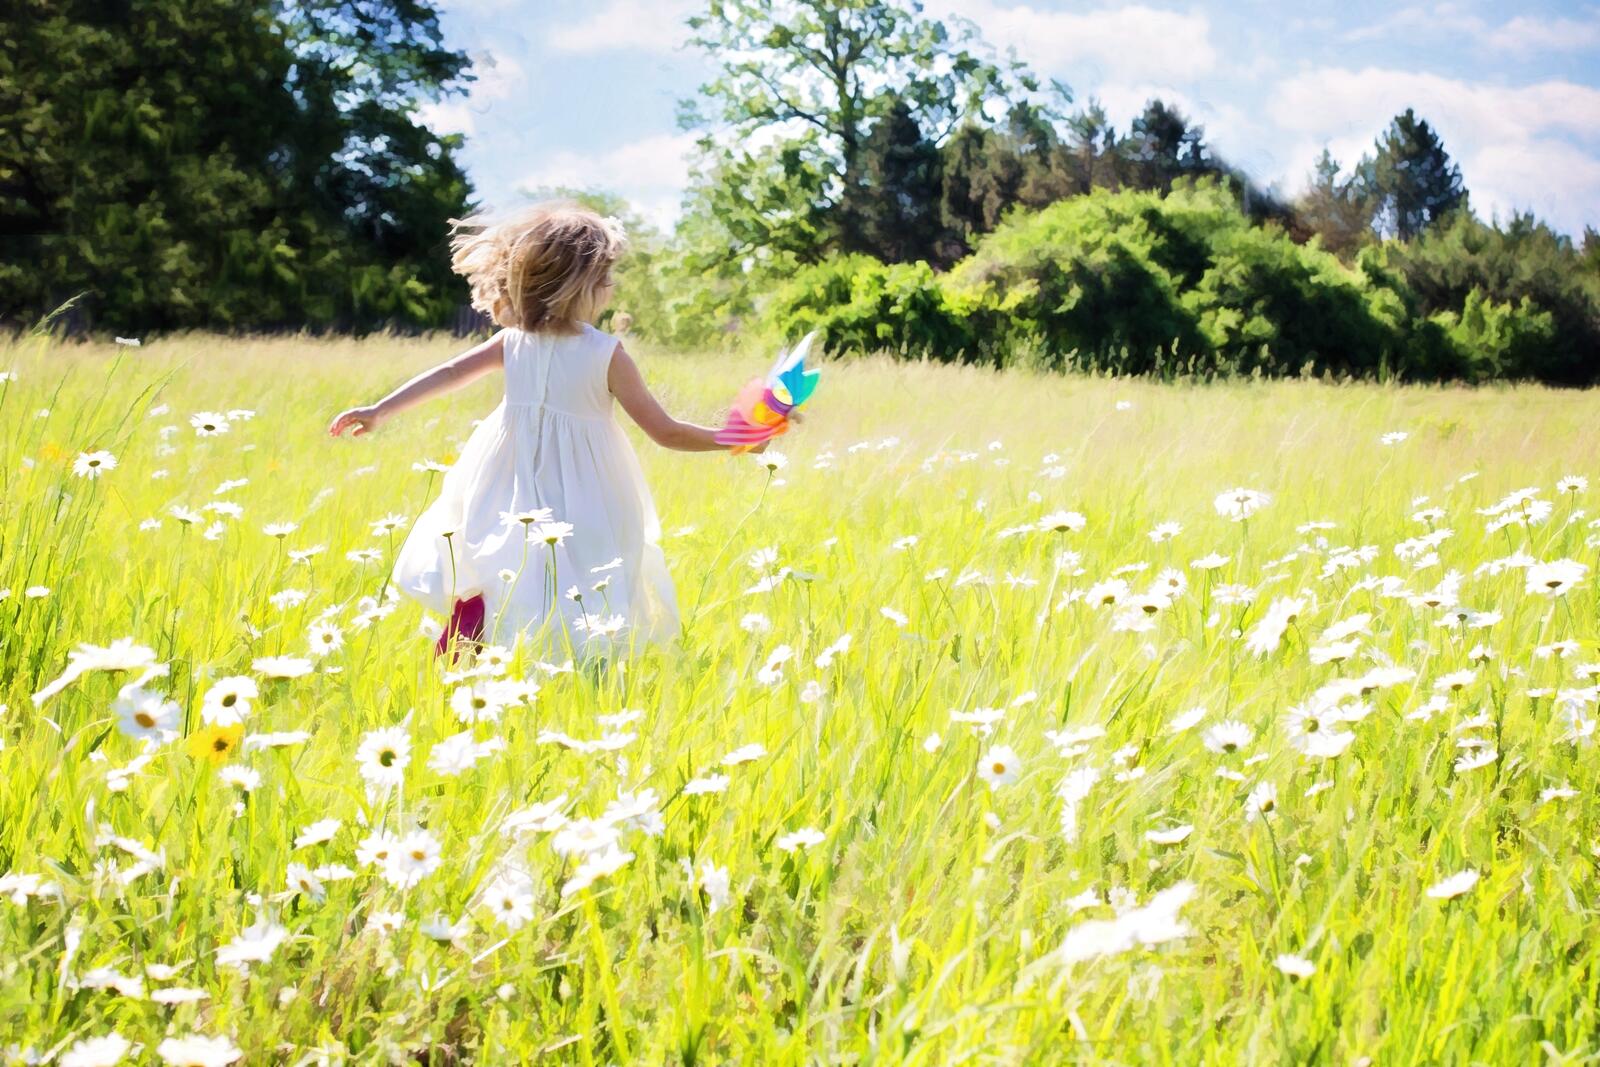 Free photo A joyful girl in a white dress running through a field of dandelions